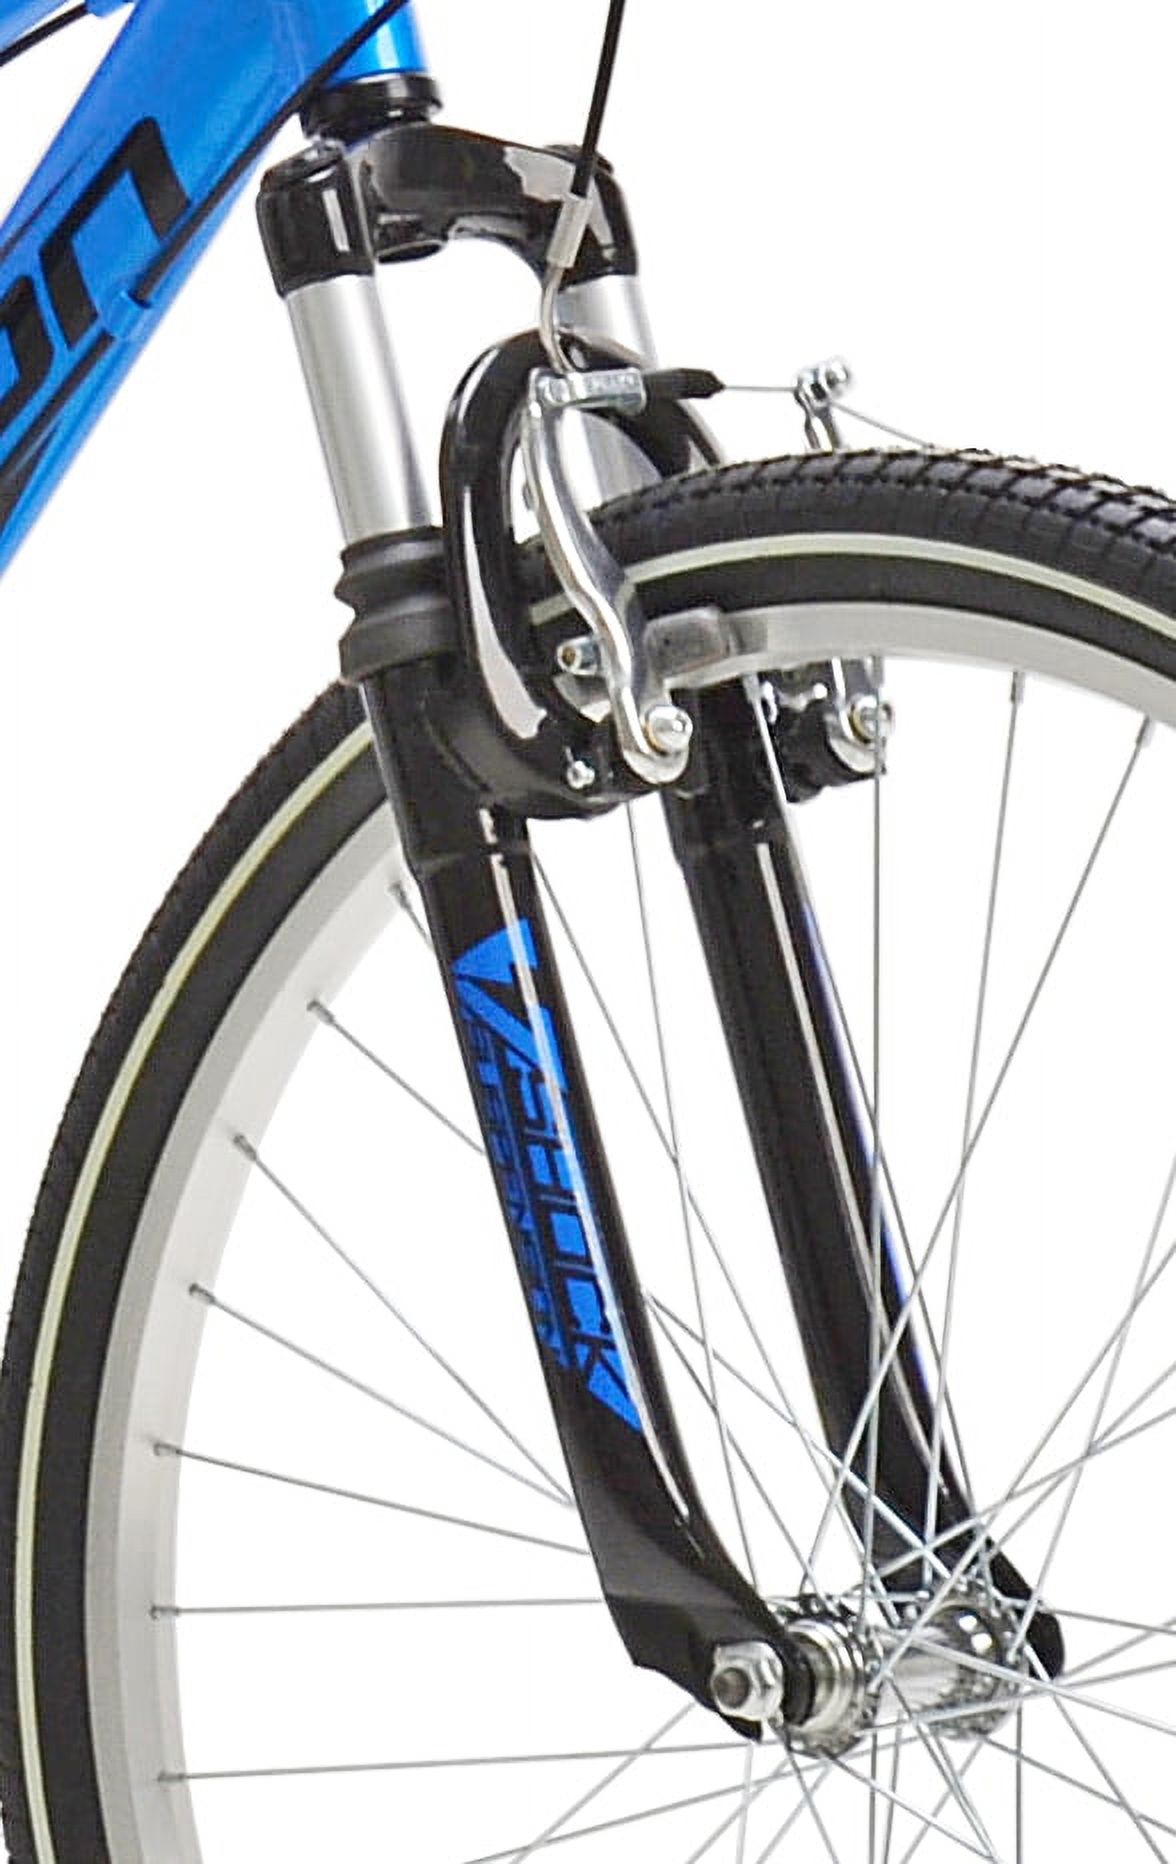 Kent Bicycle 26" Avalon Comfort-Hybrid Men's Bicycle, Blue - image 4 of 7